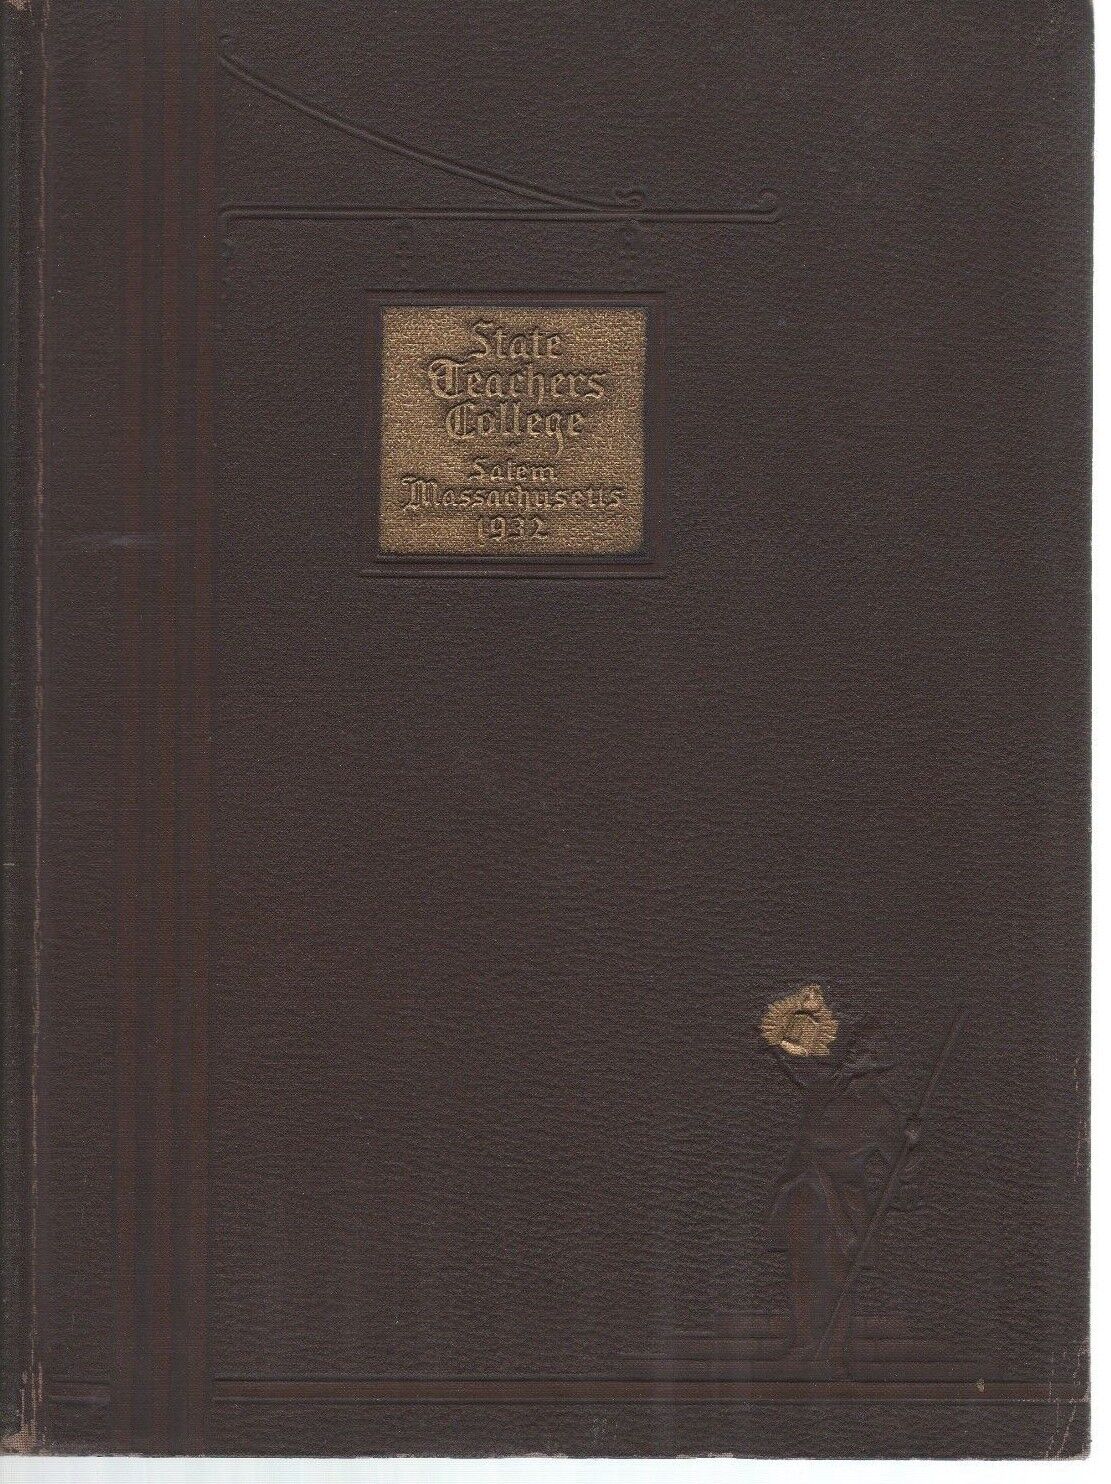 Original 1932 Salem Massachusetts State Teachers College Yearbook